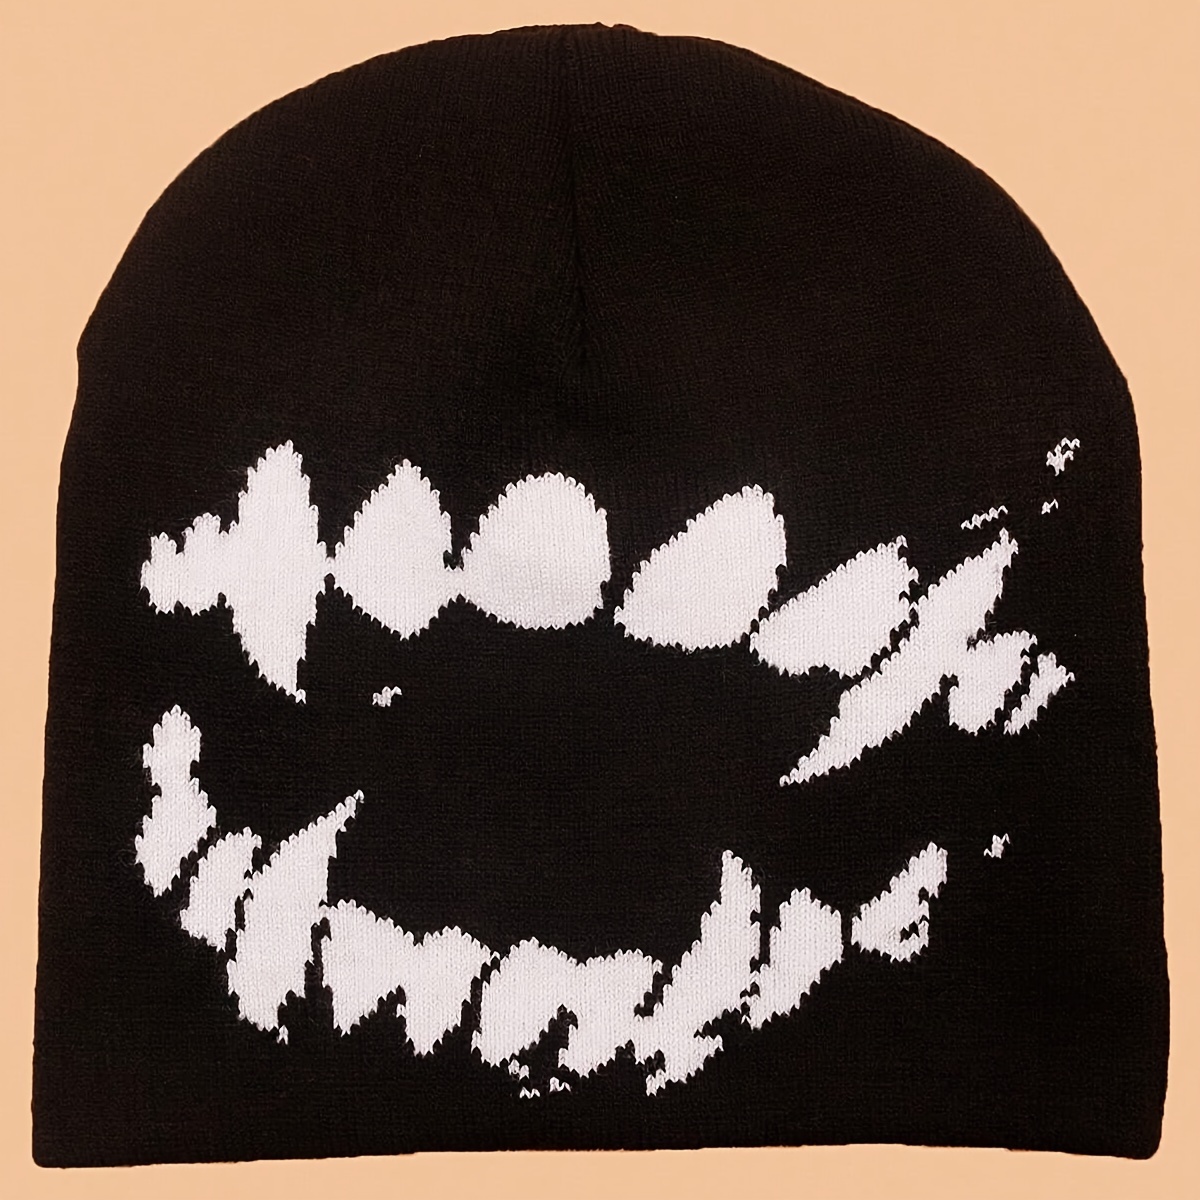 

Tooth Graphic Y2k Beanie Black & White Elastic Knit Hats Hip Hop Skull Cap Unisex Warm Beanies For Women Men